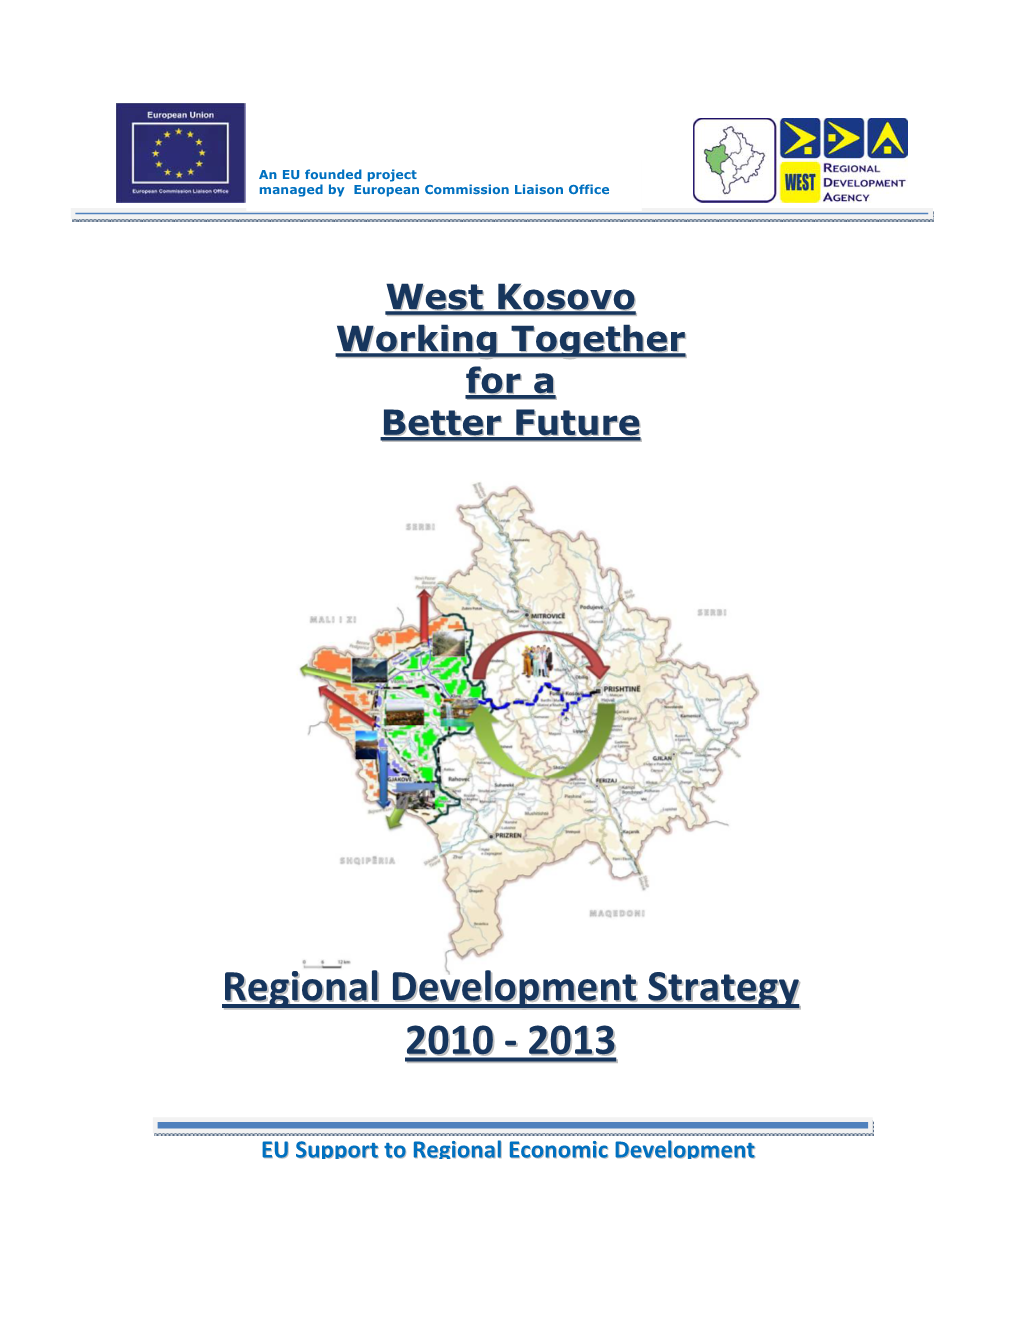 Regional Development Strategy 2010